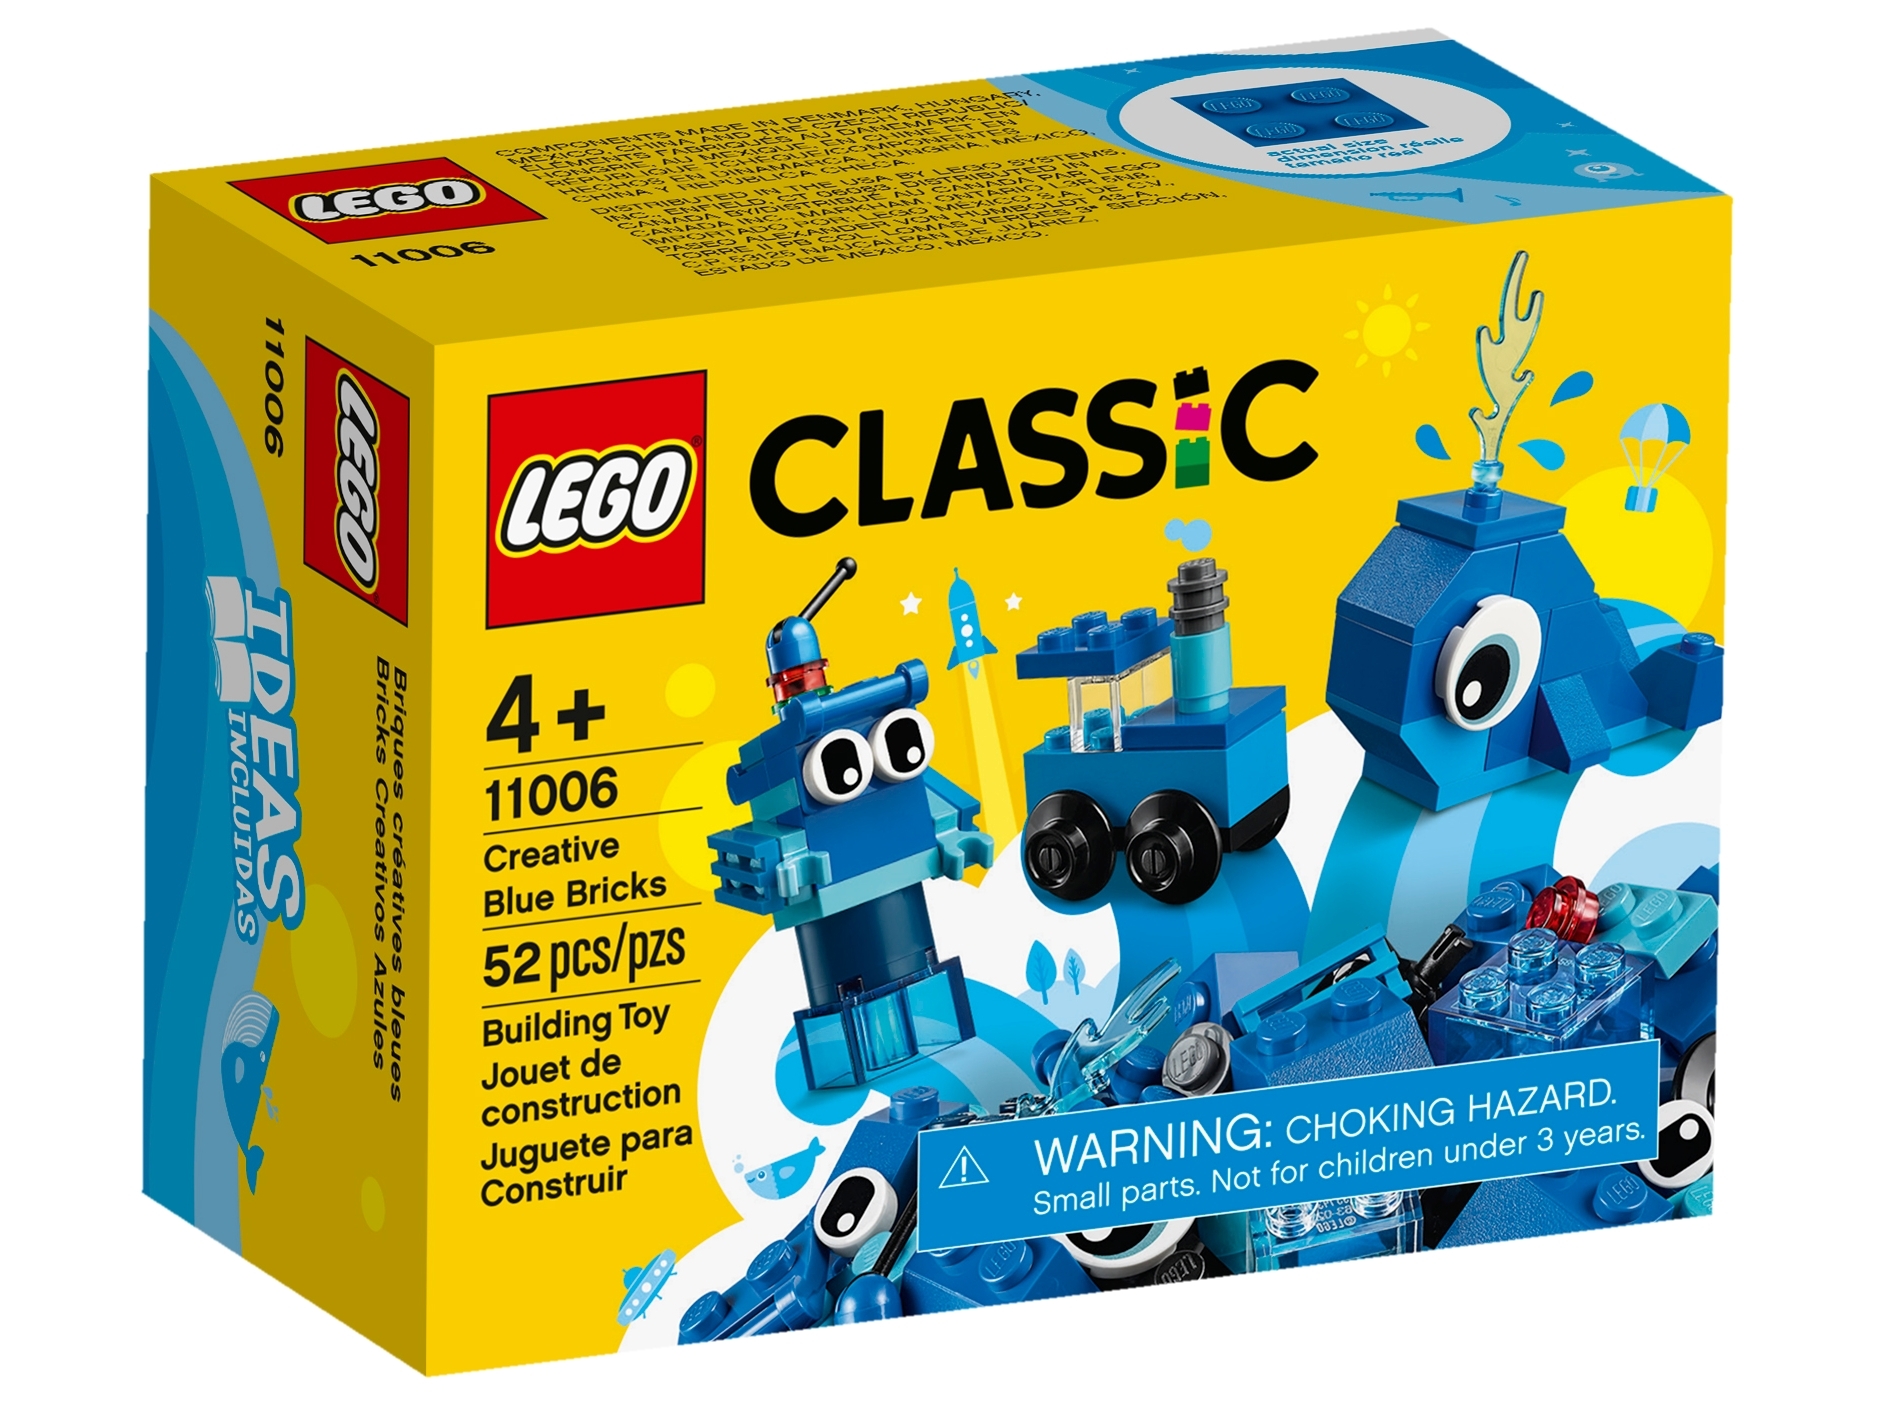 Creative Blue Bricks 11006 | Classic 